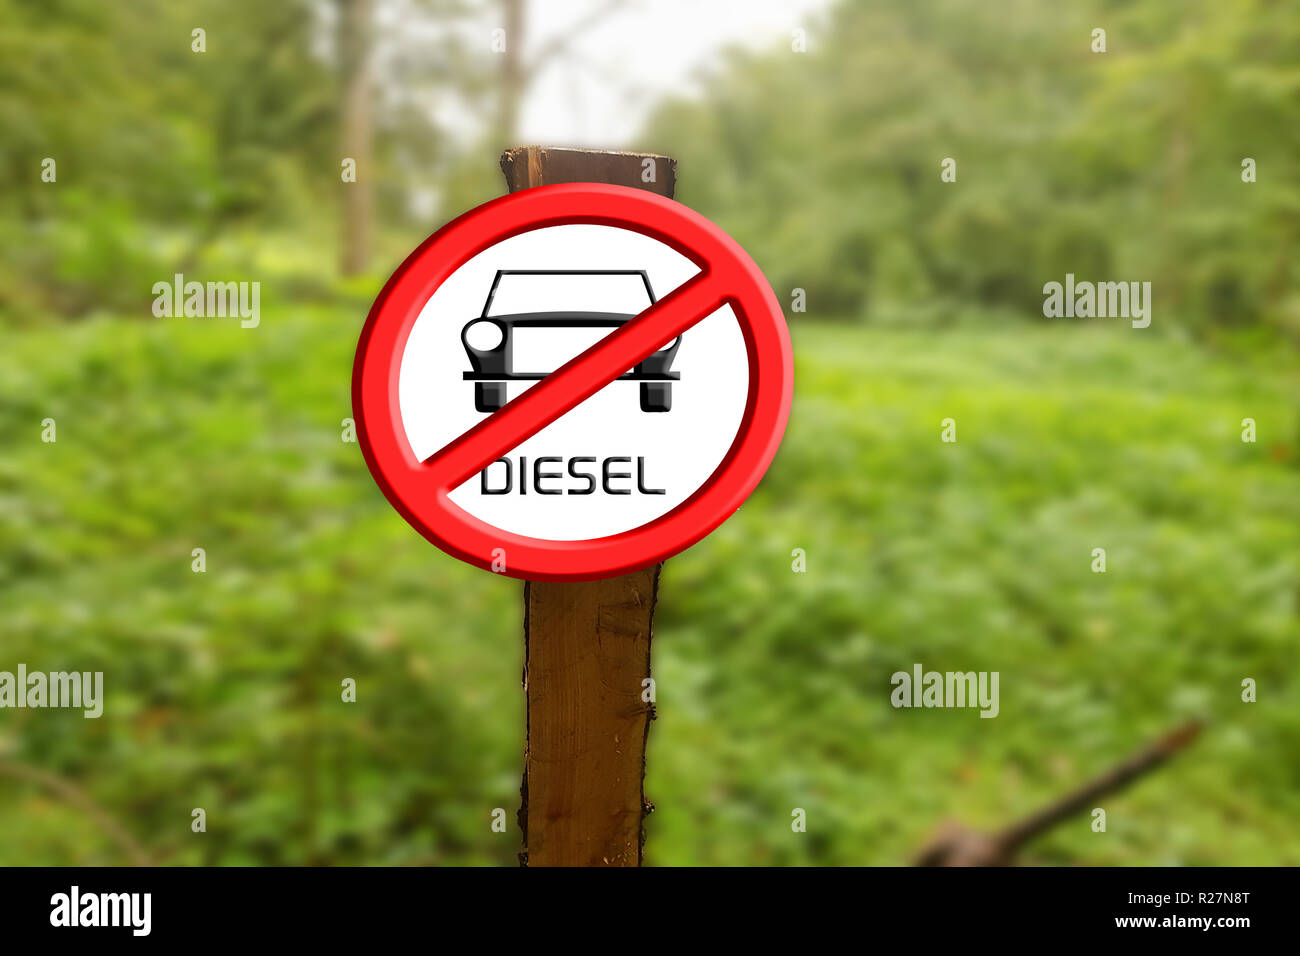 German traffic sign German traffic sign speak. Concept Diesel free zone, environmental zone, diesel prohibited, diesel prohibition or driving ban Stock Photo